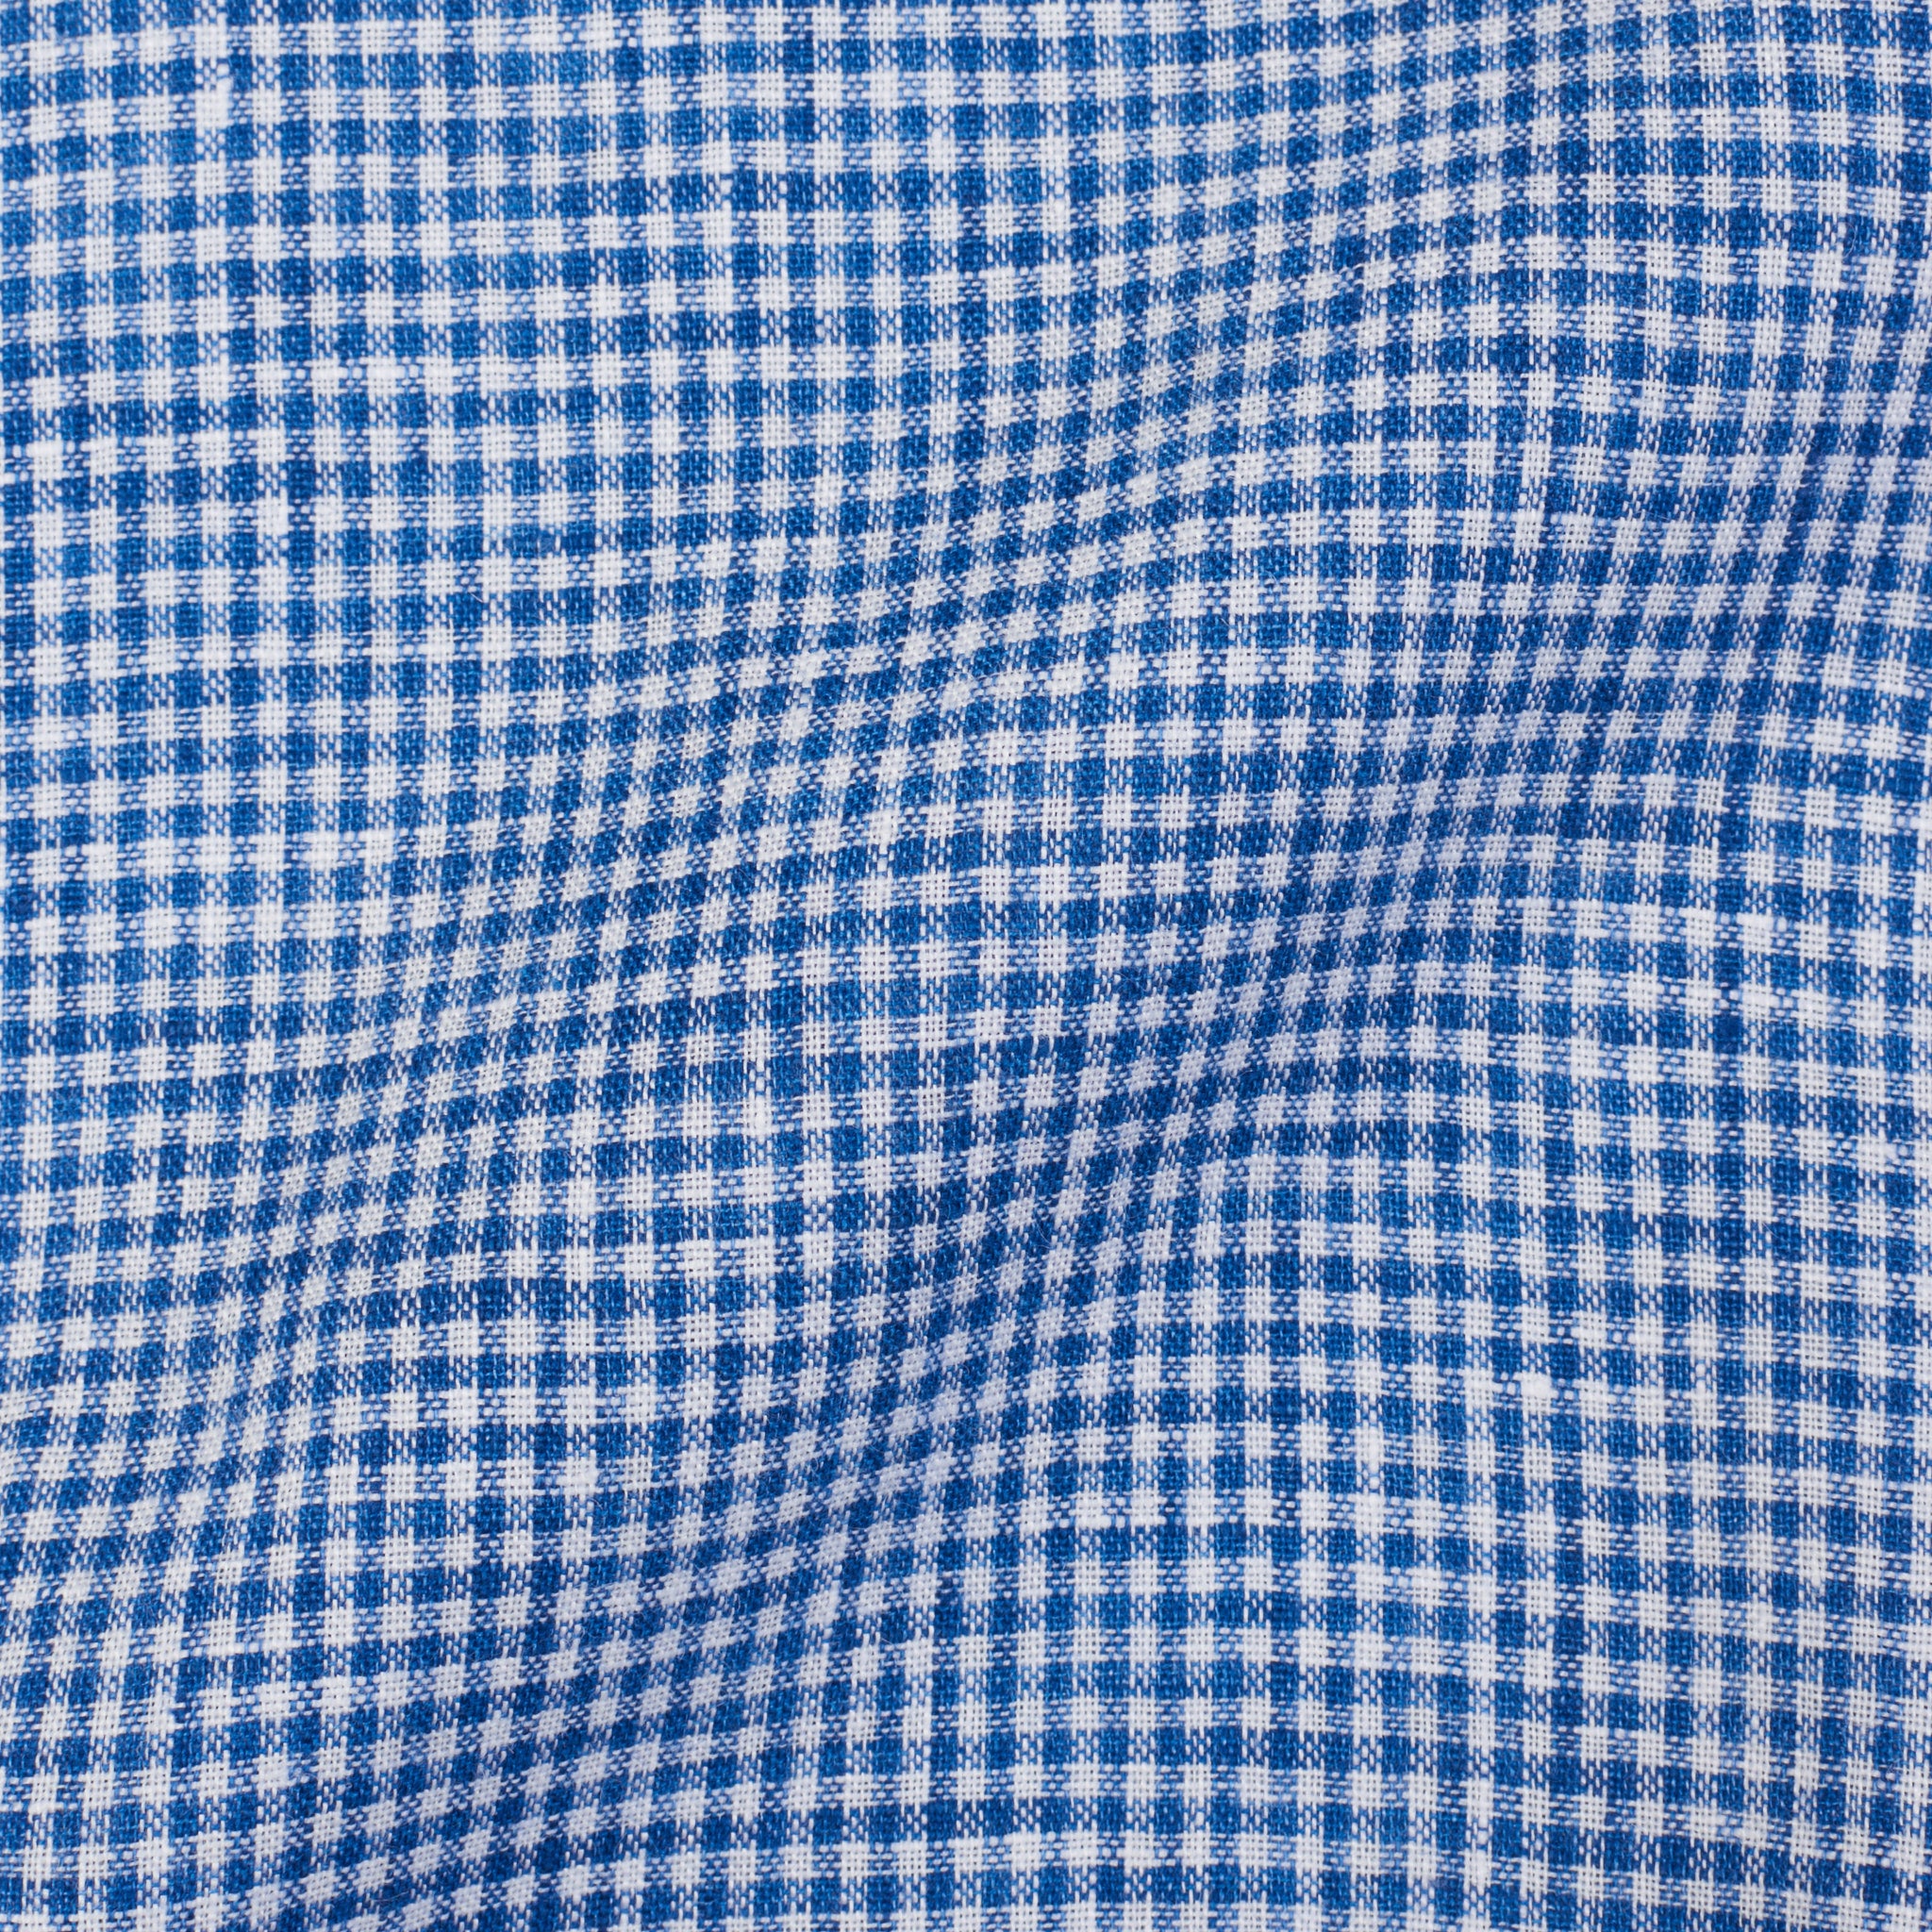 M.BARDELLI Milano Blue Gingham Check Linen 1 Pocket Casual Shirt NEW Size M M.BARDELLI